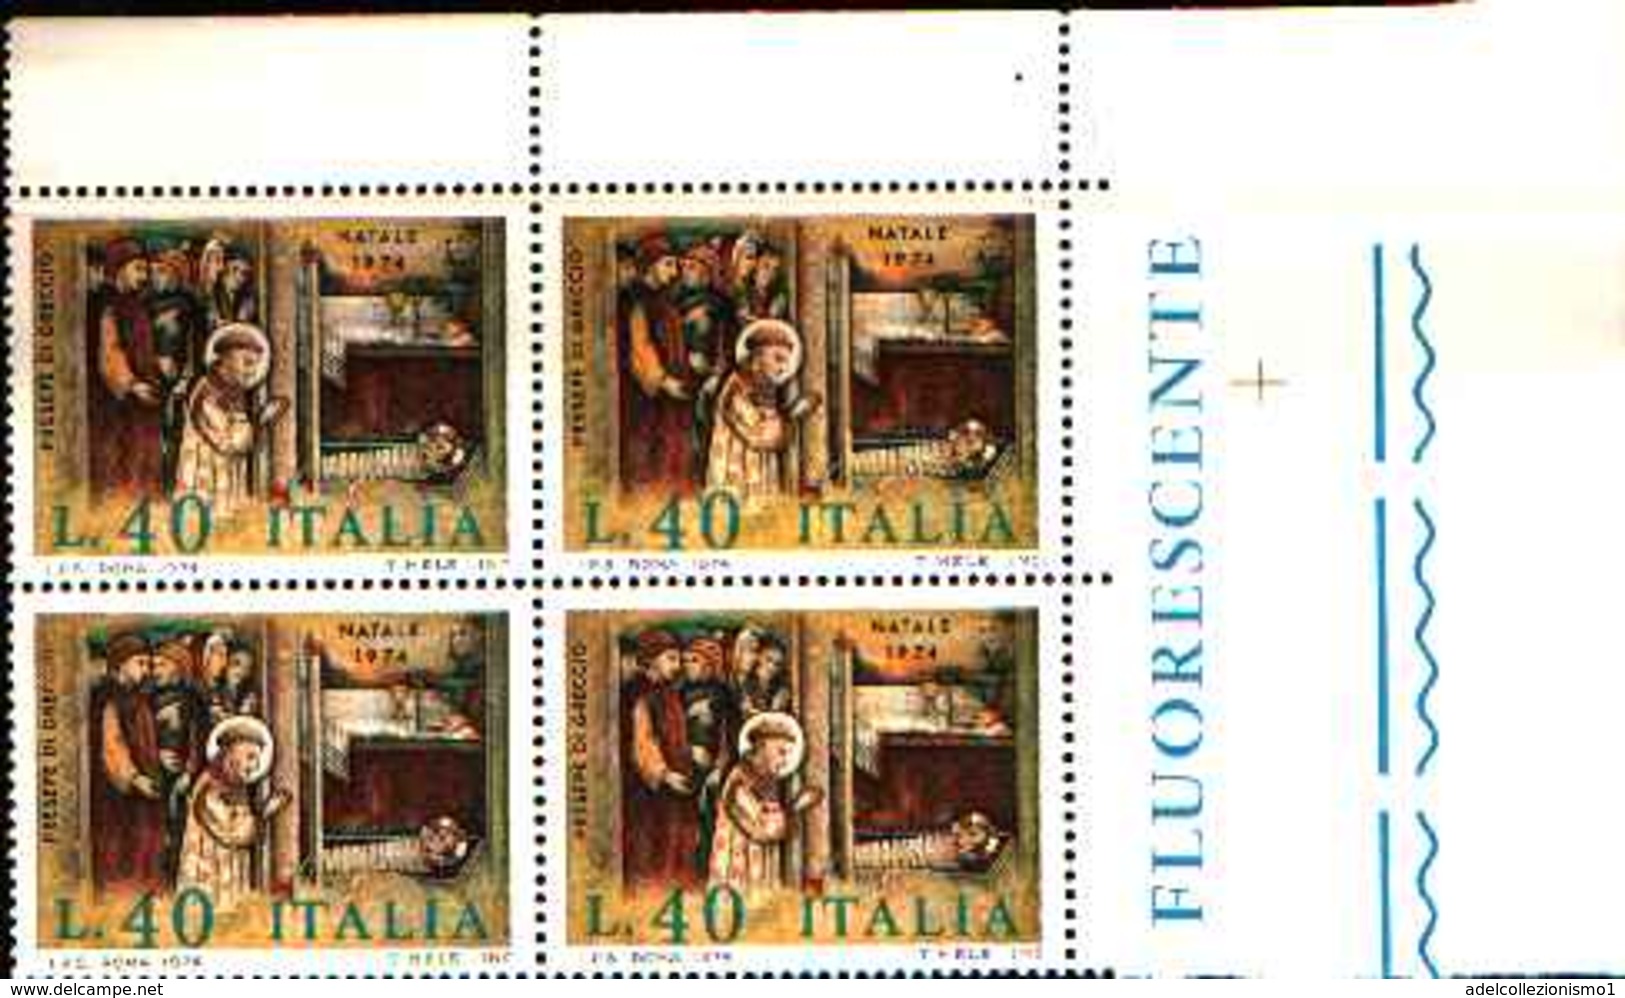 74847) ITALIA-QUARTINA-Natale - 26 Novembre 1974 -MNH** - 1971-80: Mint/hinged